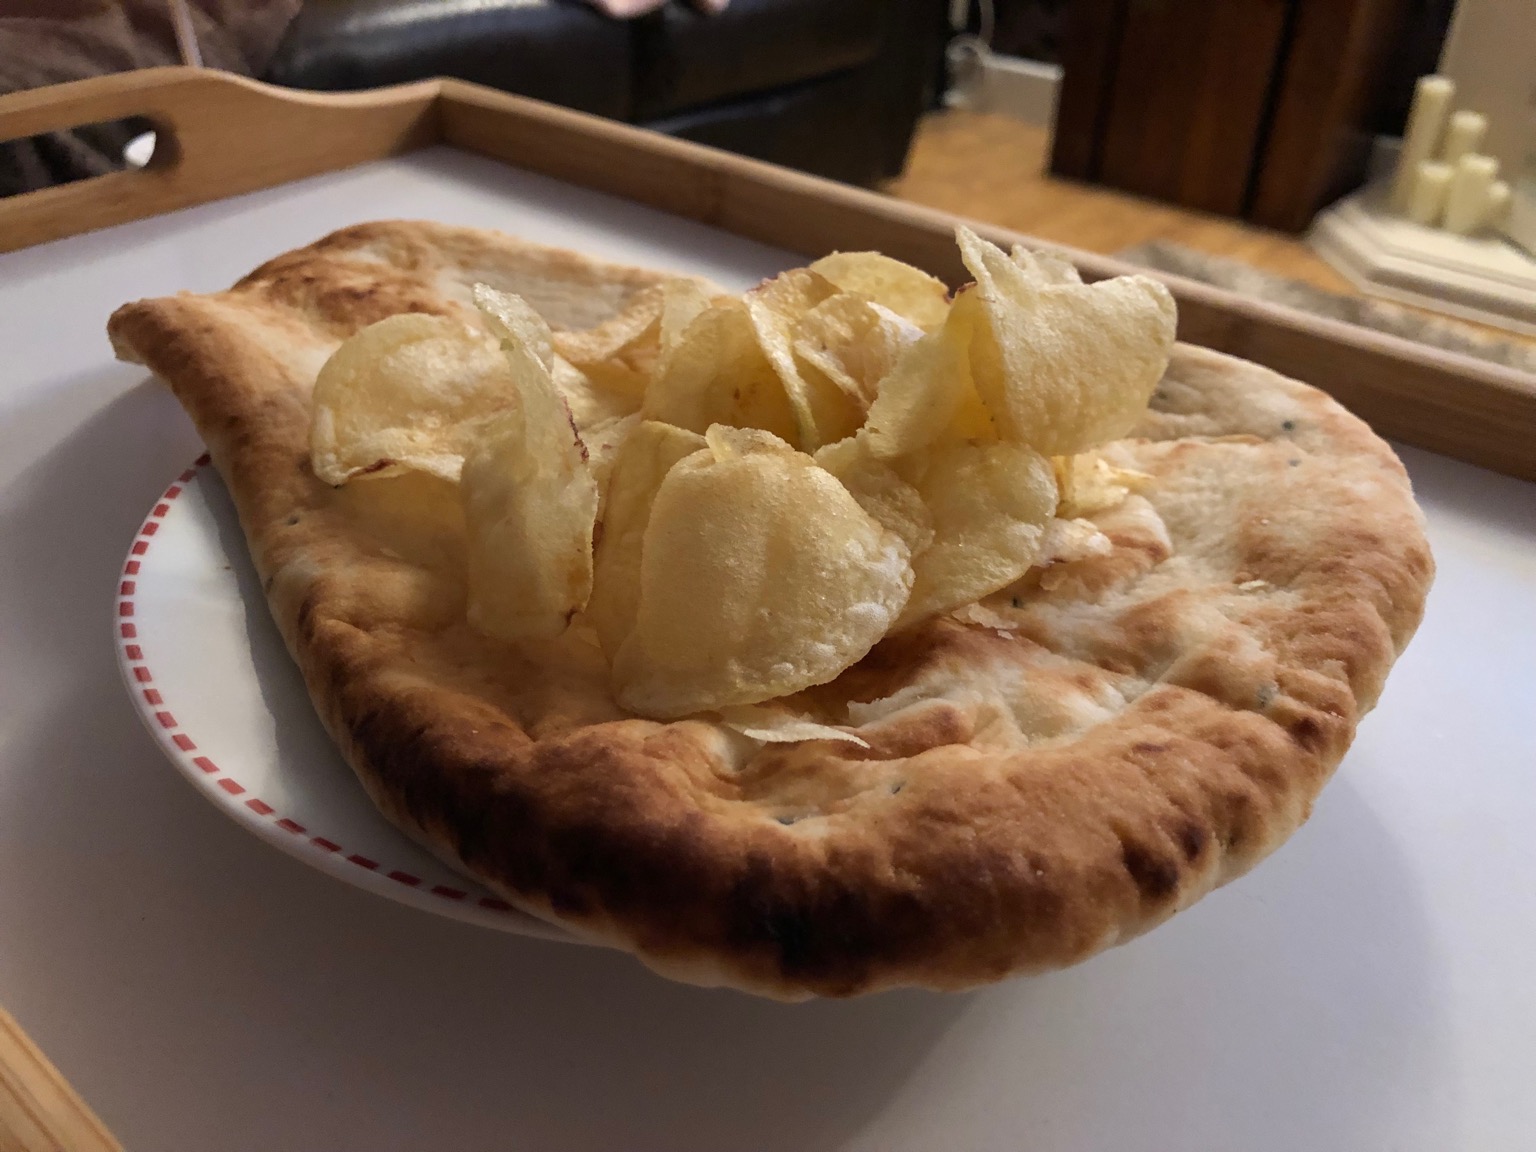 Potato crisps laid on a whole naan bread